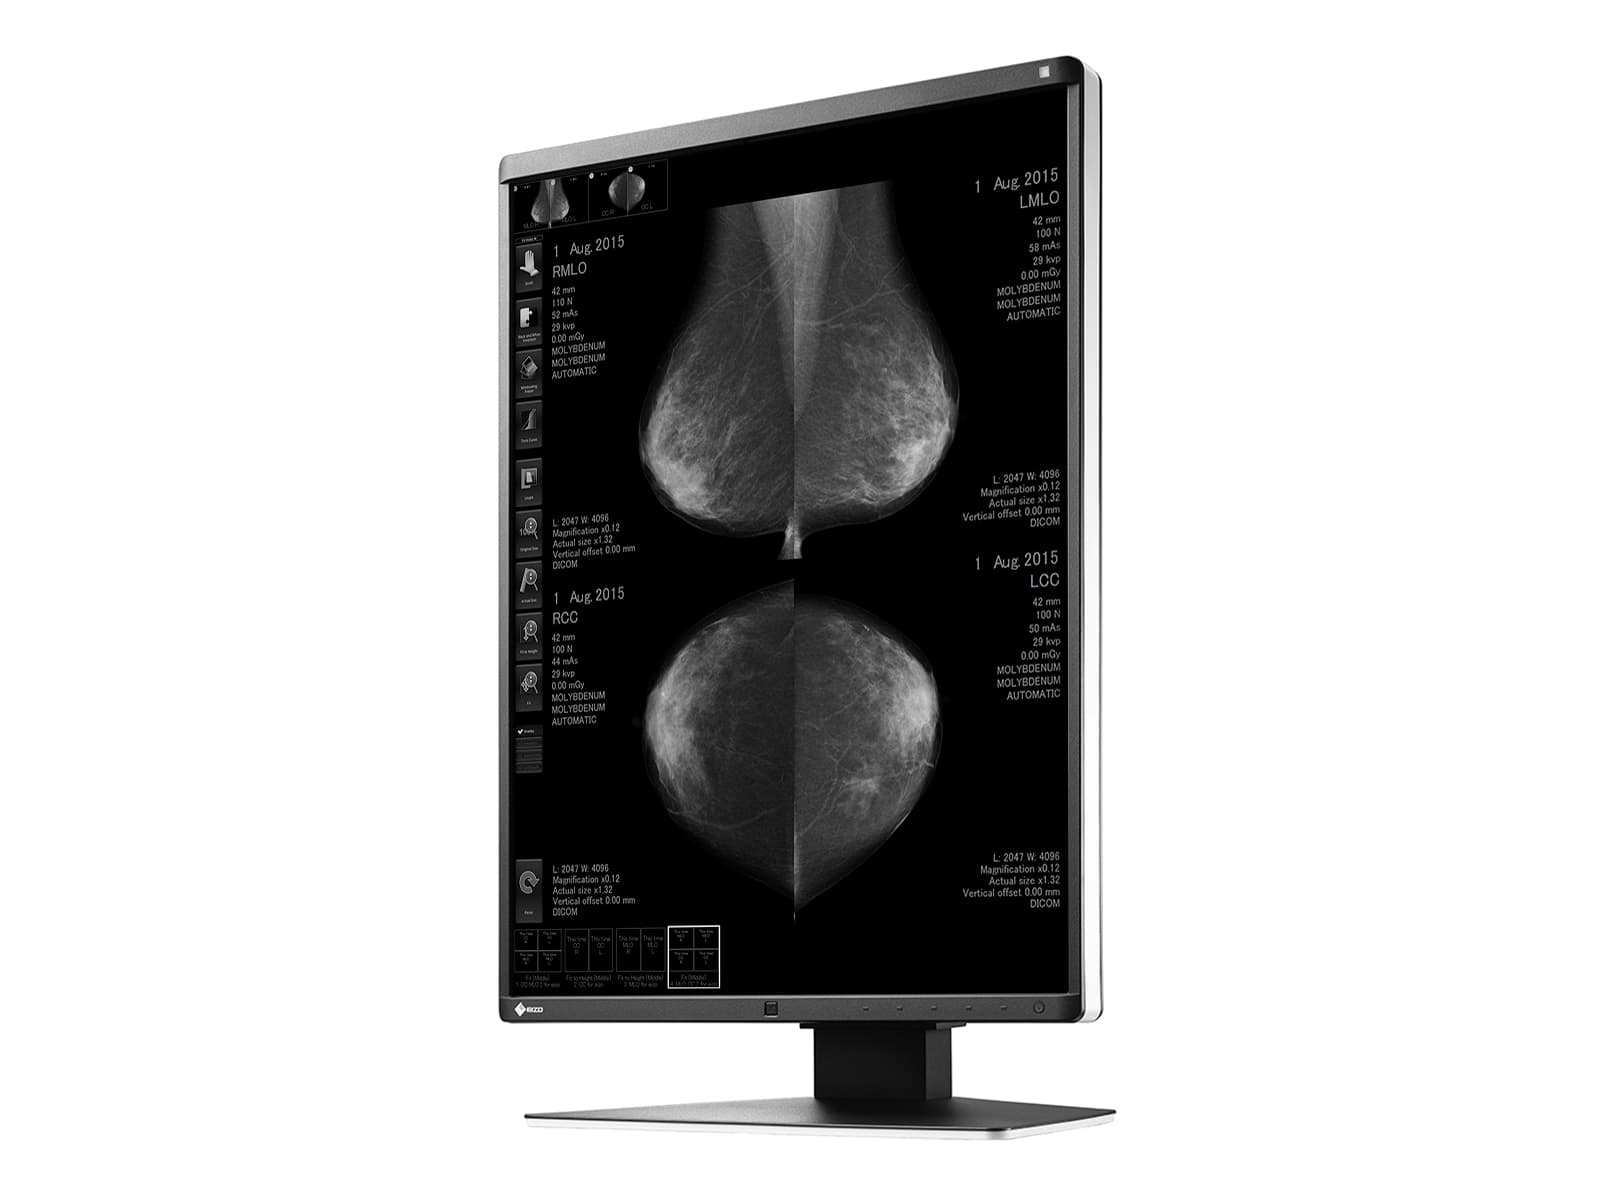 Eizo RadiForce GX560 5MP 21 インチ LED グレースケール Mammo 3D-DBT 乳房画像表示ディスプレイ モニター (GX560-MD) Monitors.com